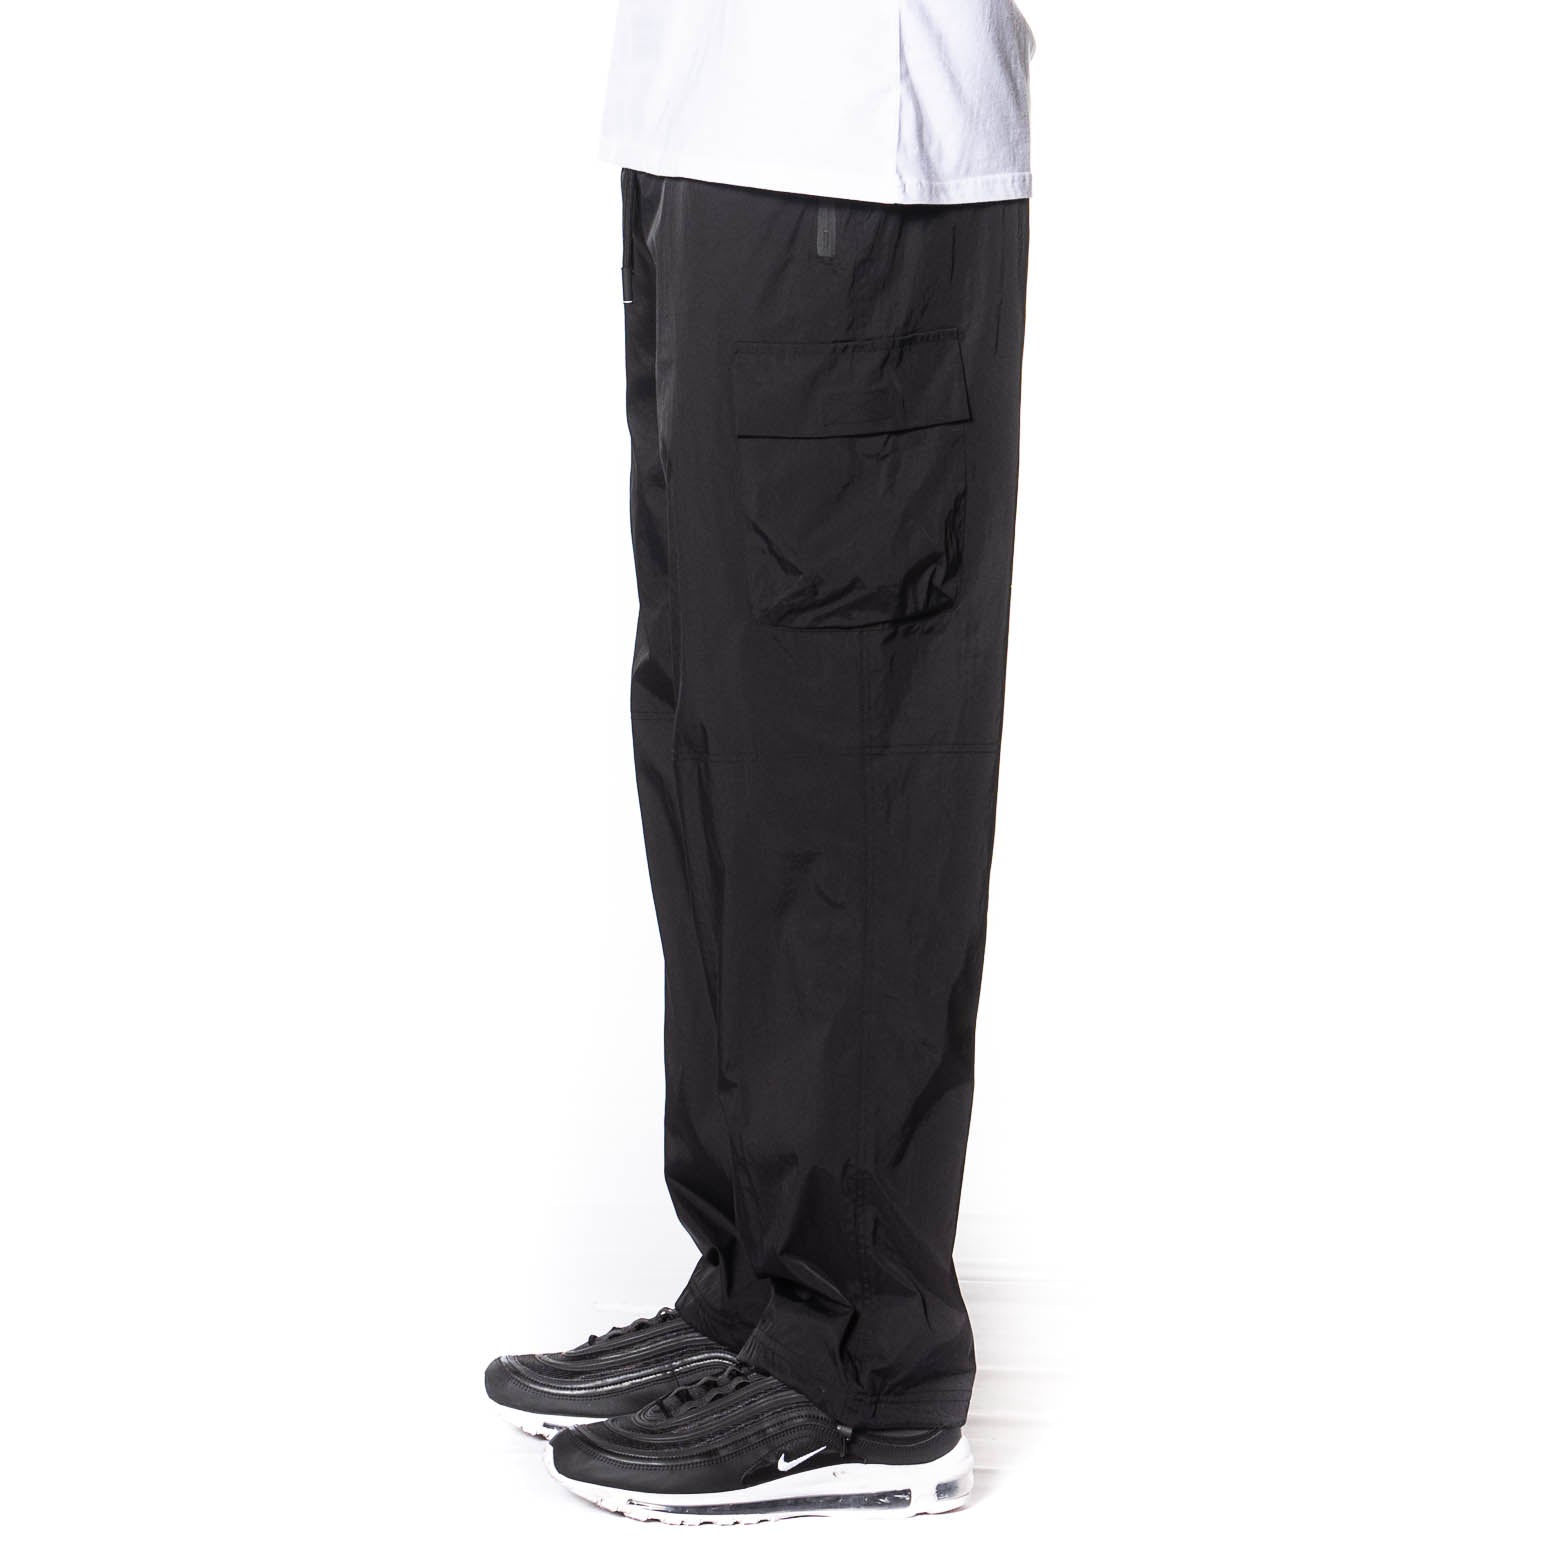 Revgear Adult Nylon Pant - NEW - Solid Black - No Stripes! - Revgear